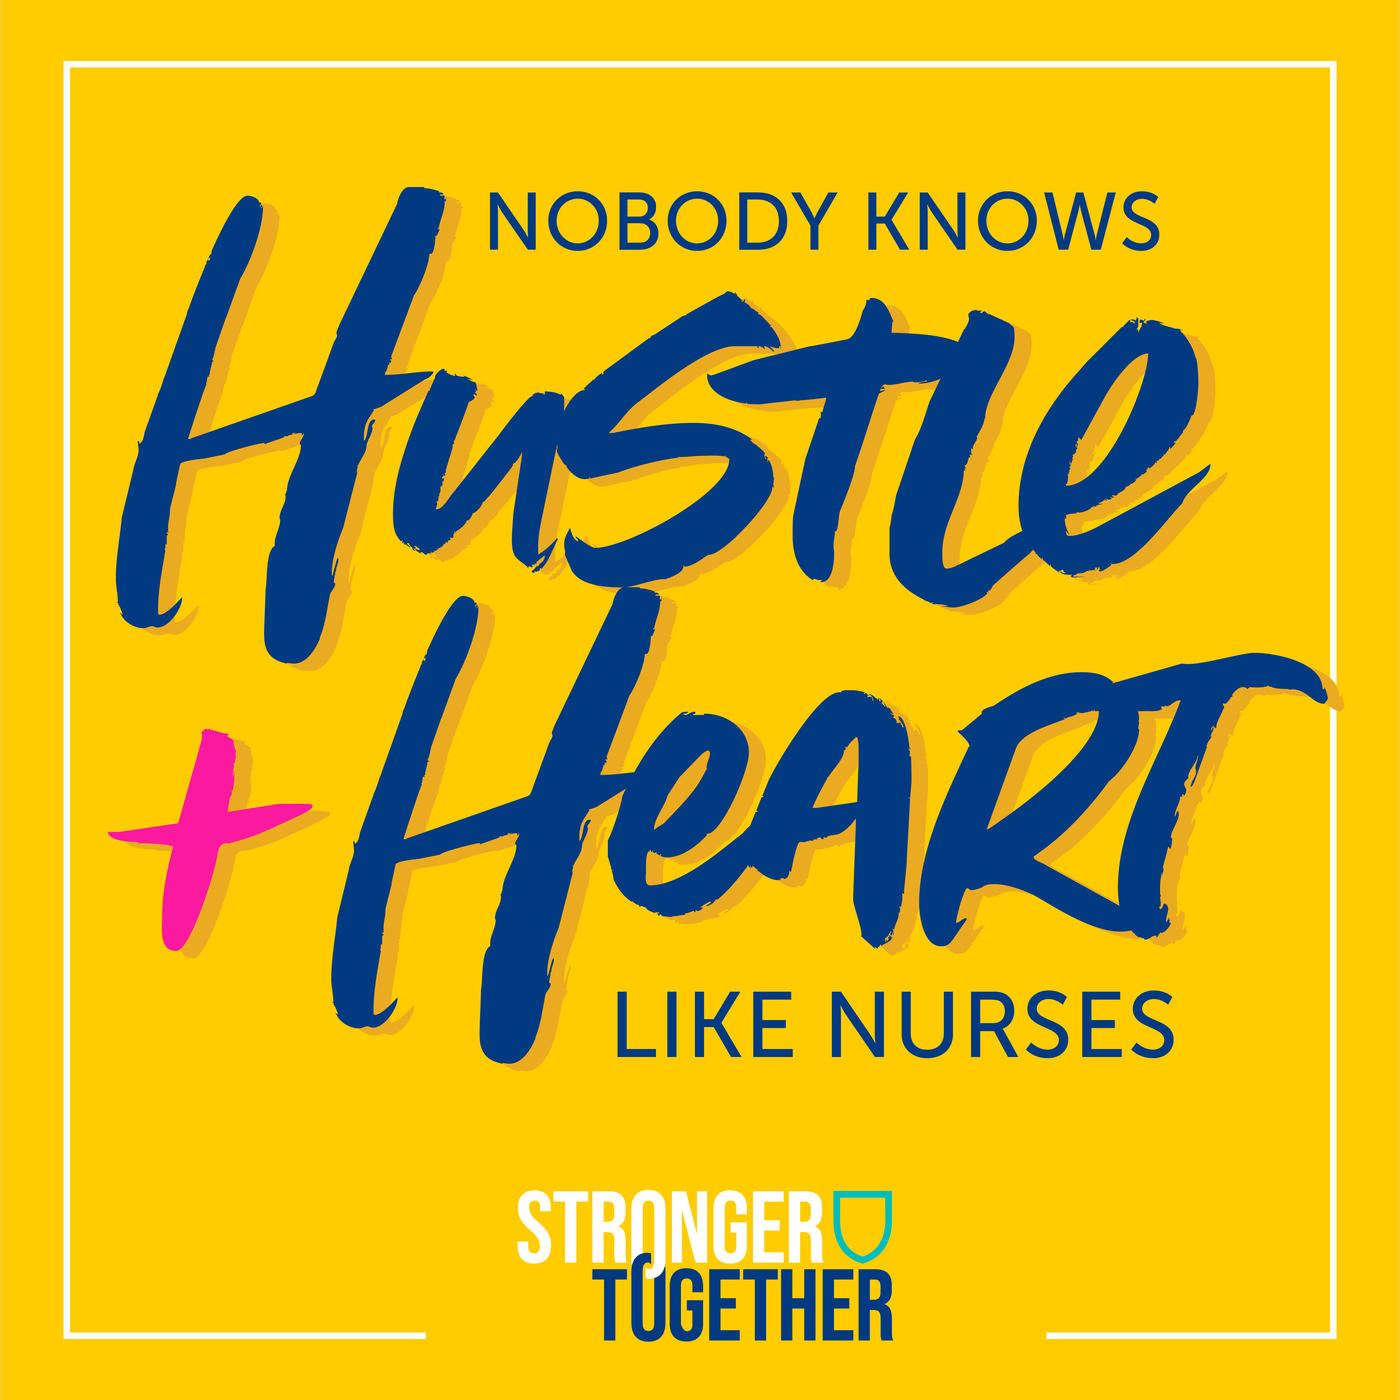 "Nobody know hustle & heart like nurses"